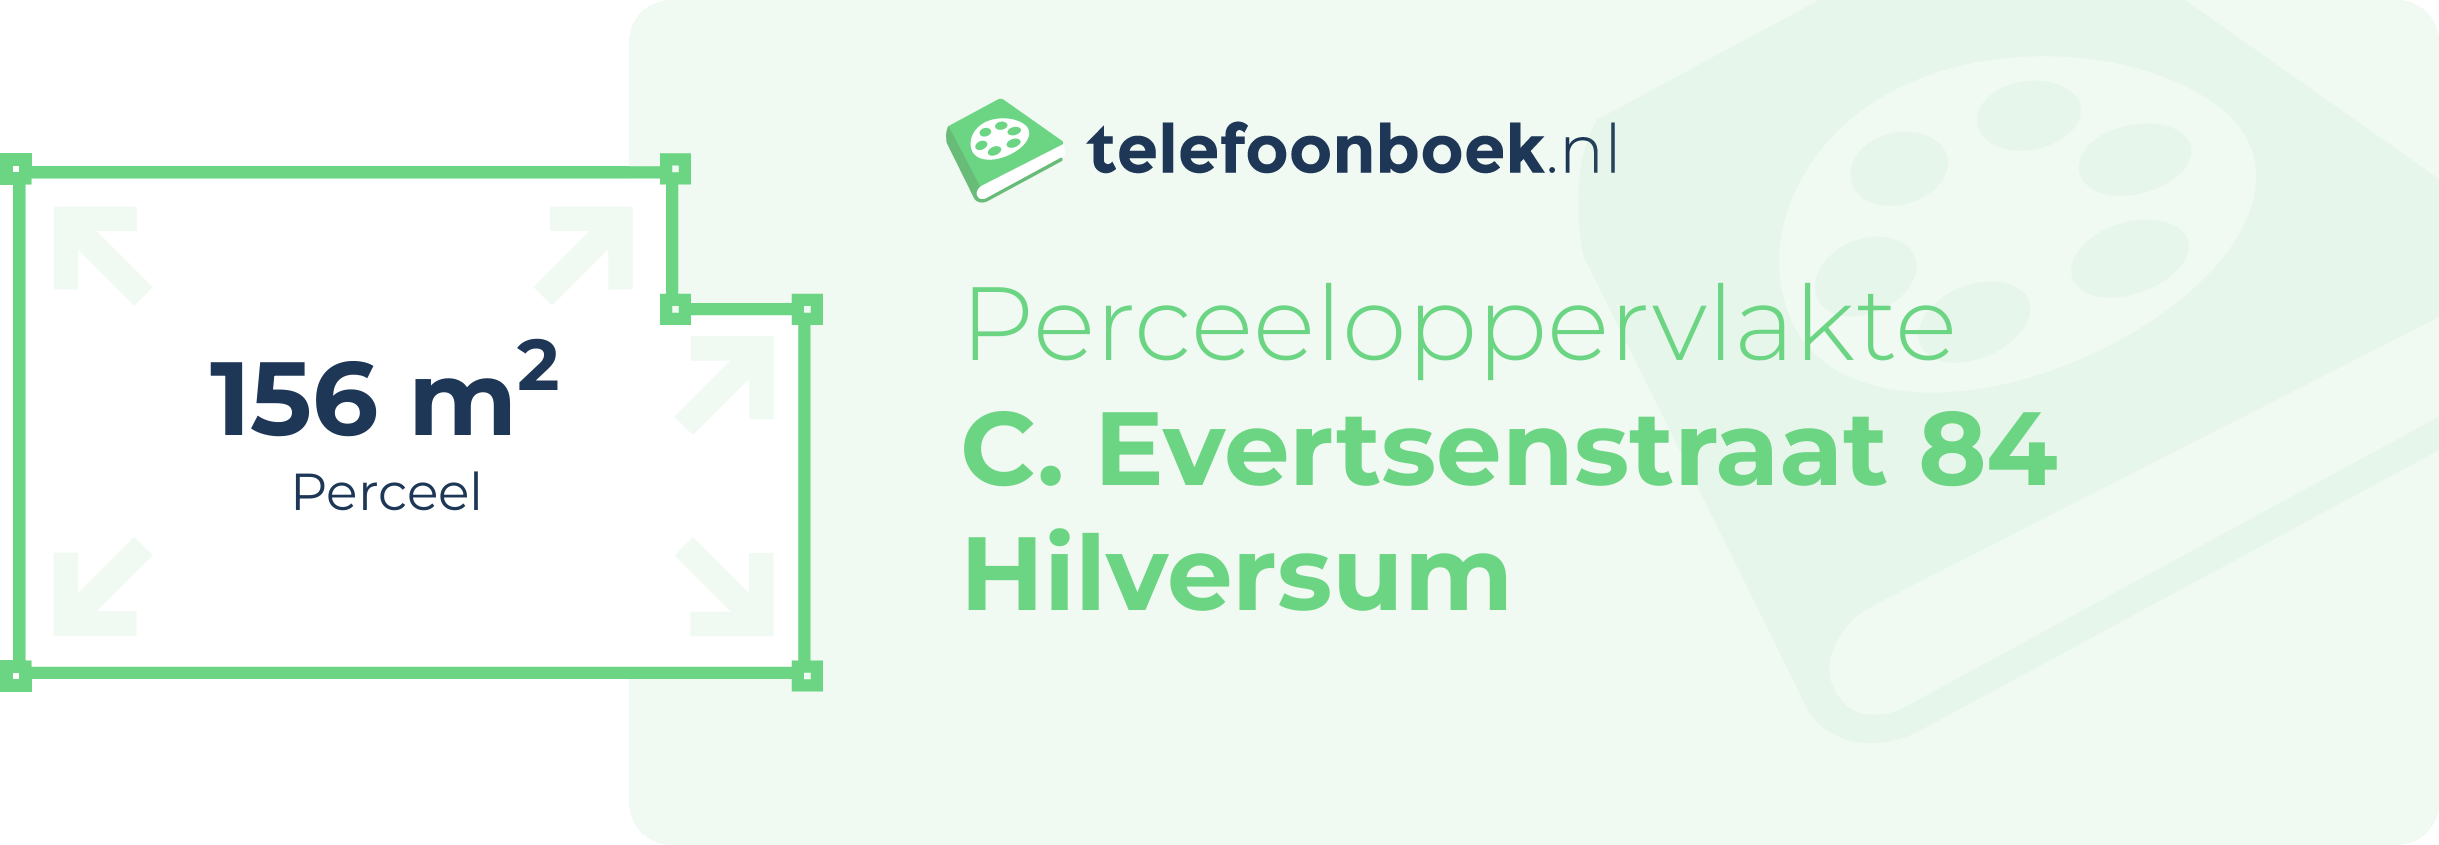 Perceeloppervlakte C. Evertsenstraat 84 Hilversum